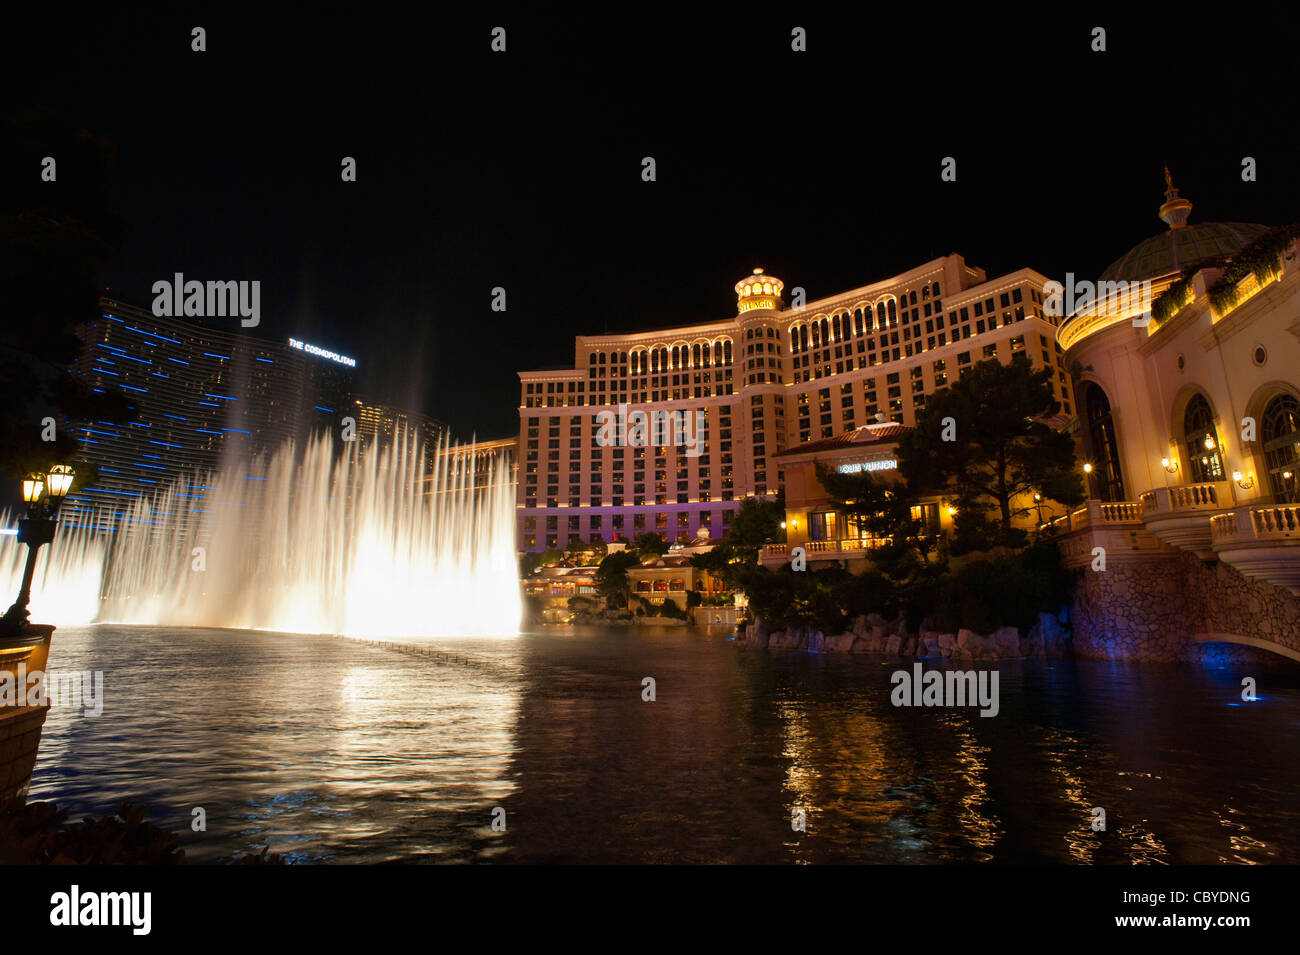 The fountains of Bellagio Hotel Las Vegas Stock Photo